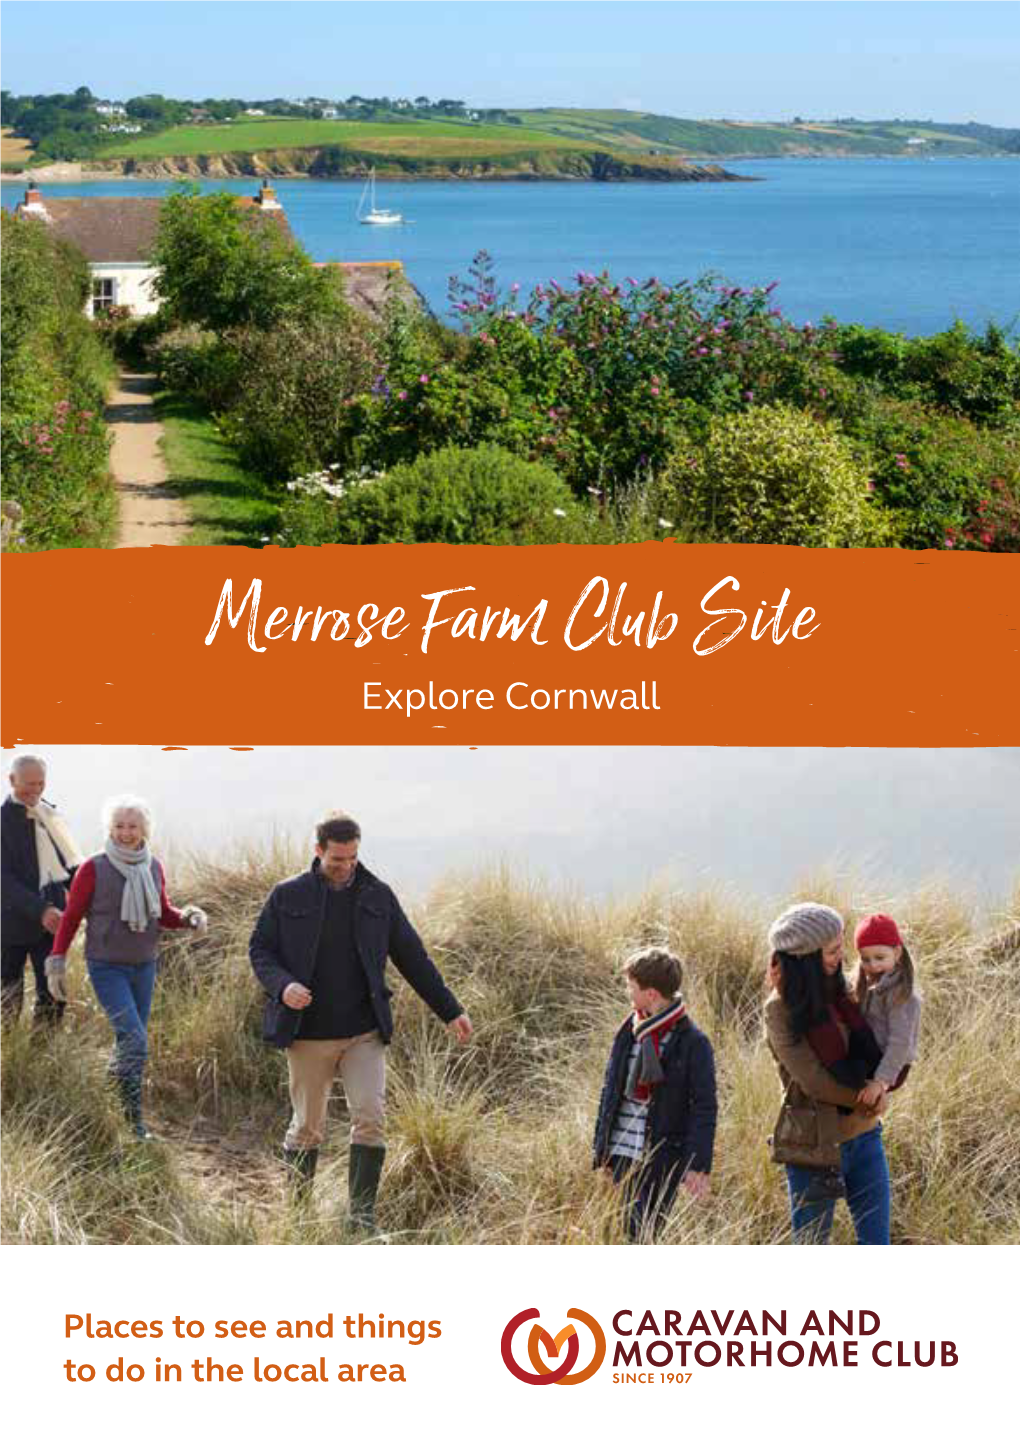 Merrose Farm Club Site Explore Cornwall